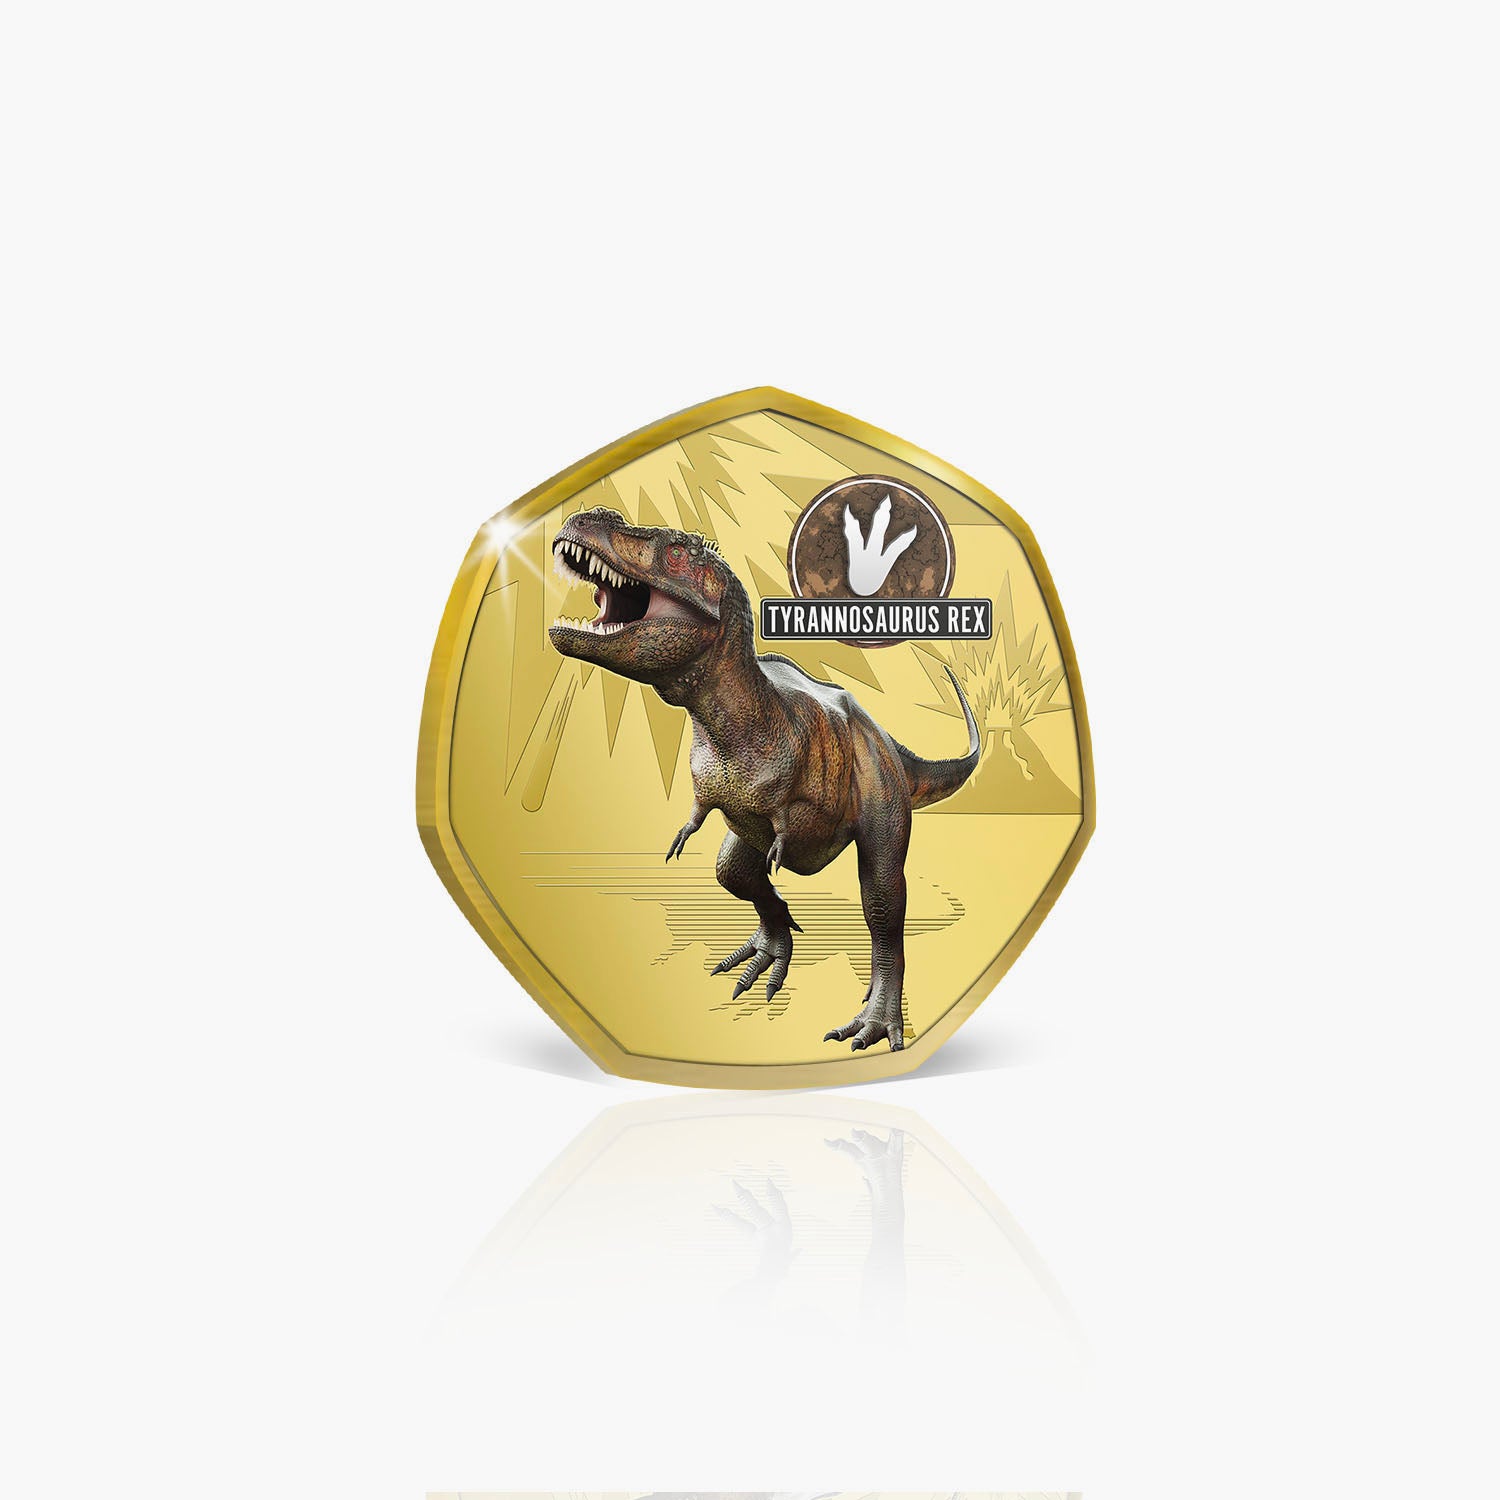 Tyrannosaurus Rex Gold Plated Coin